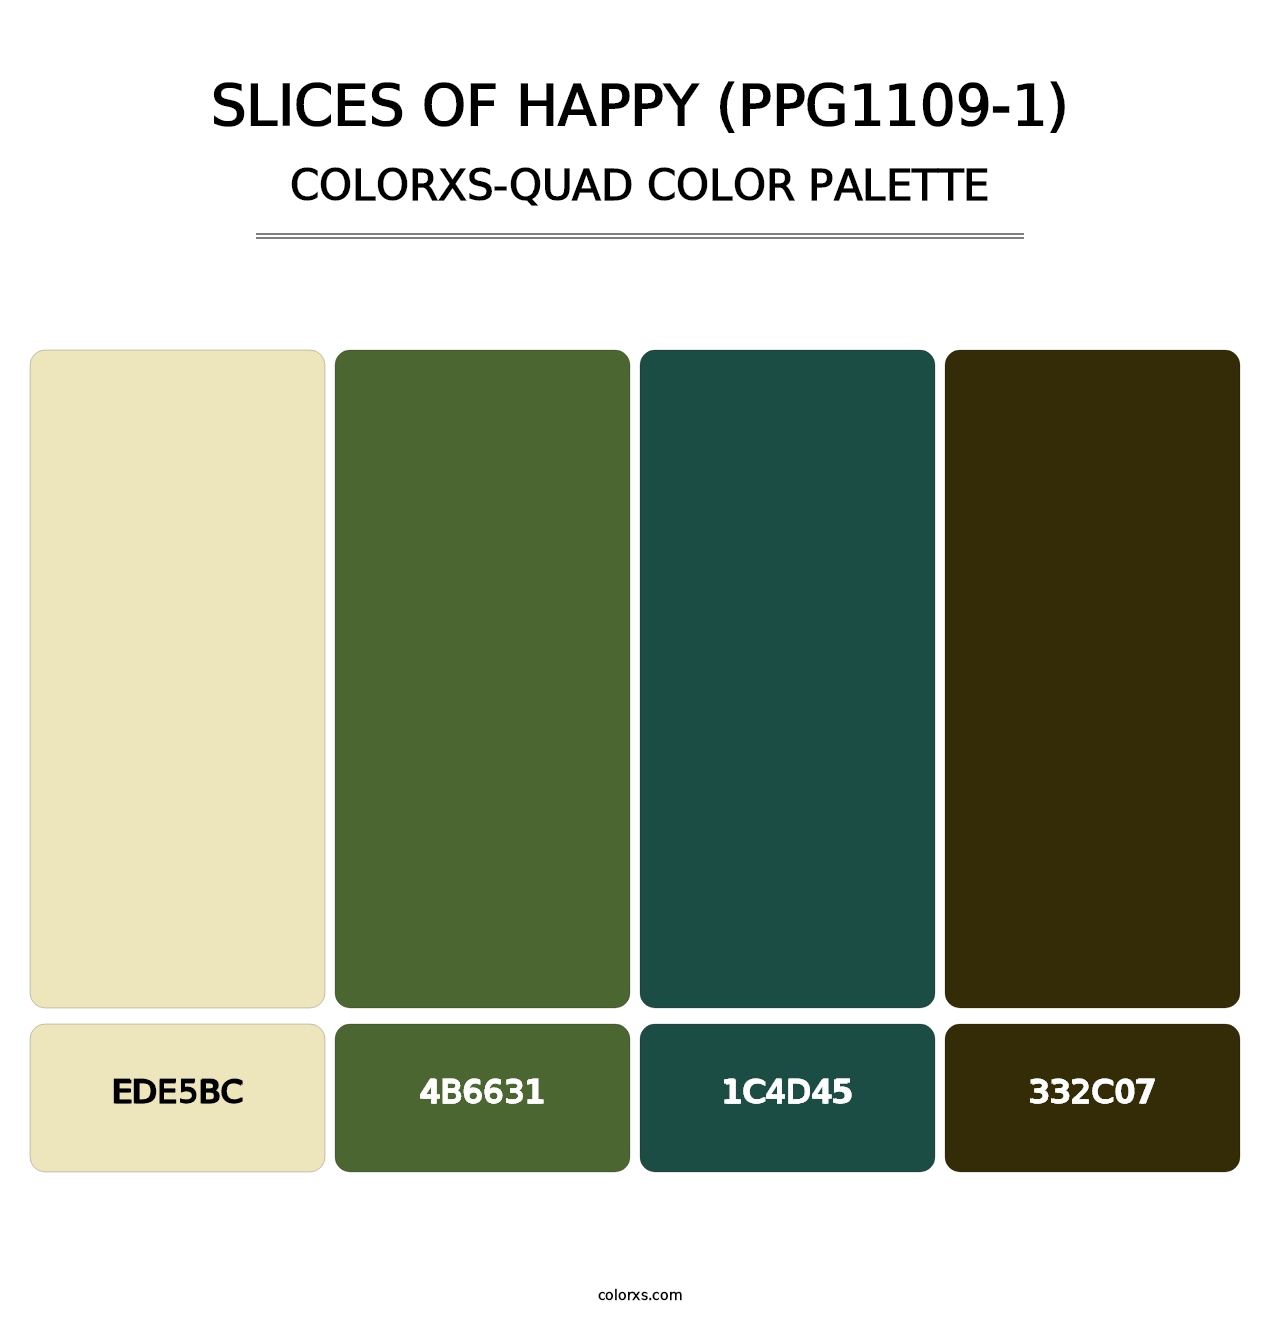 Slices Of Happy (PPG1109-1) - Colorxs Quad Palette